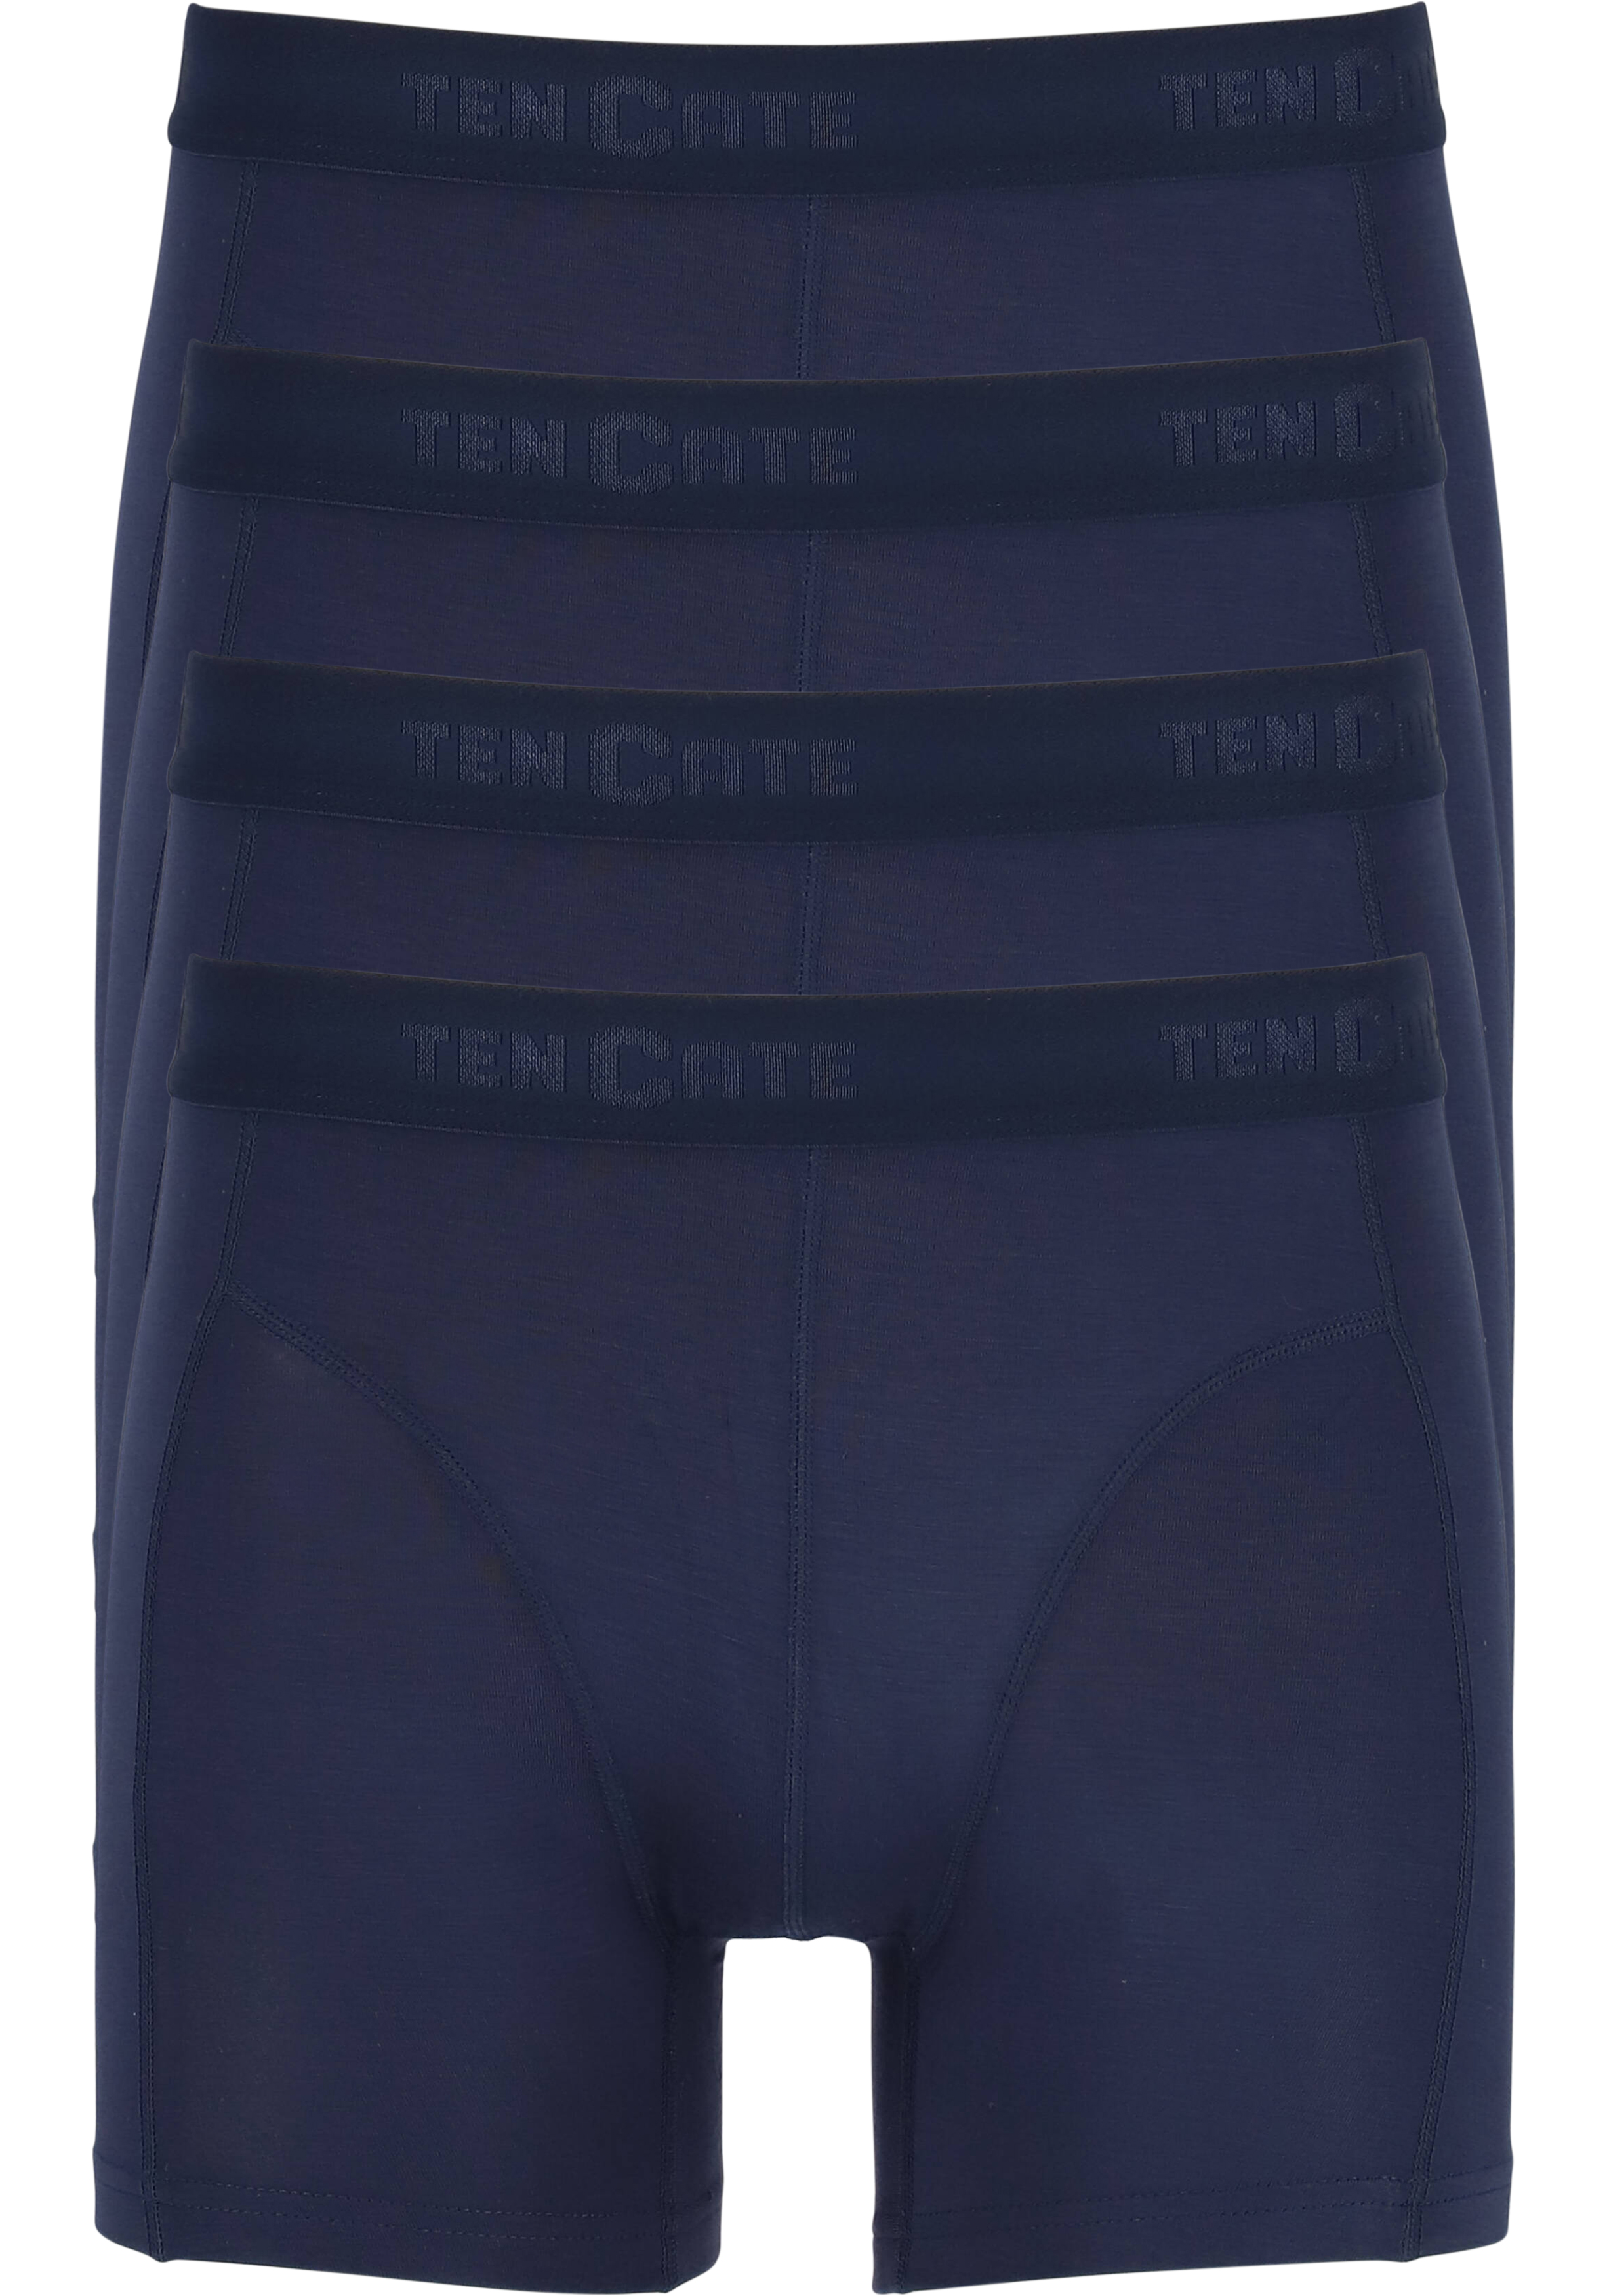 TEN CATE Basics men bamboo viscose shorts (4-pack), heren boxers normale lengte, blauw